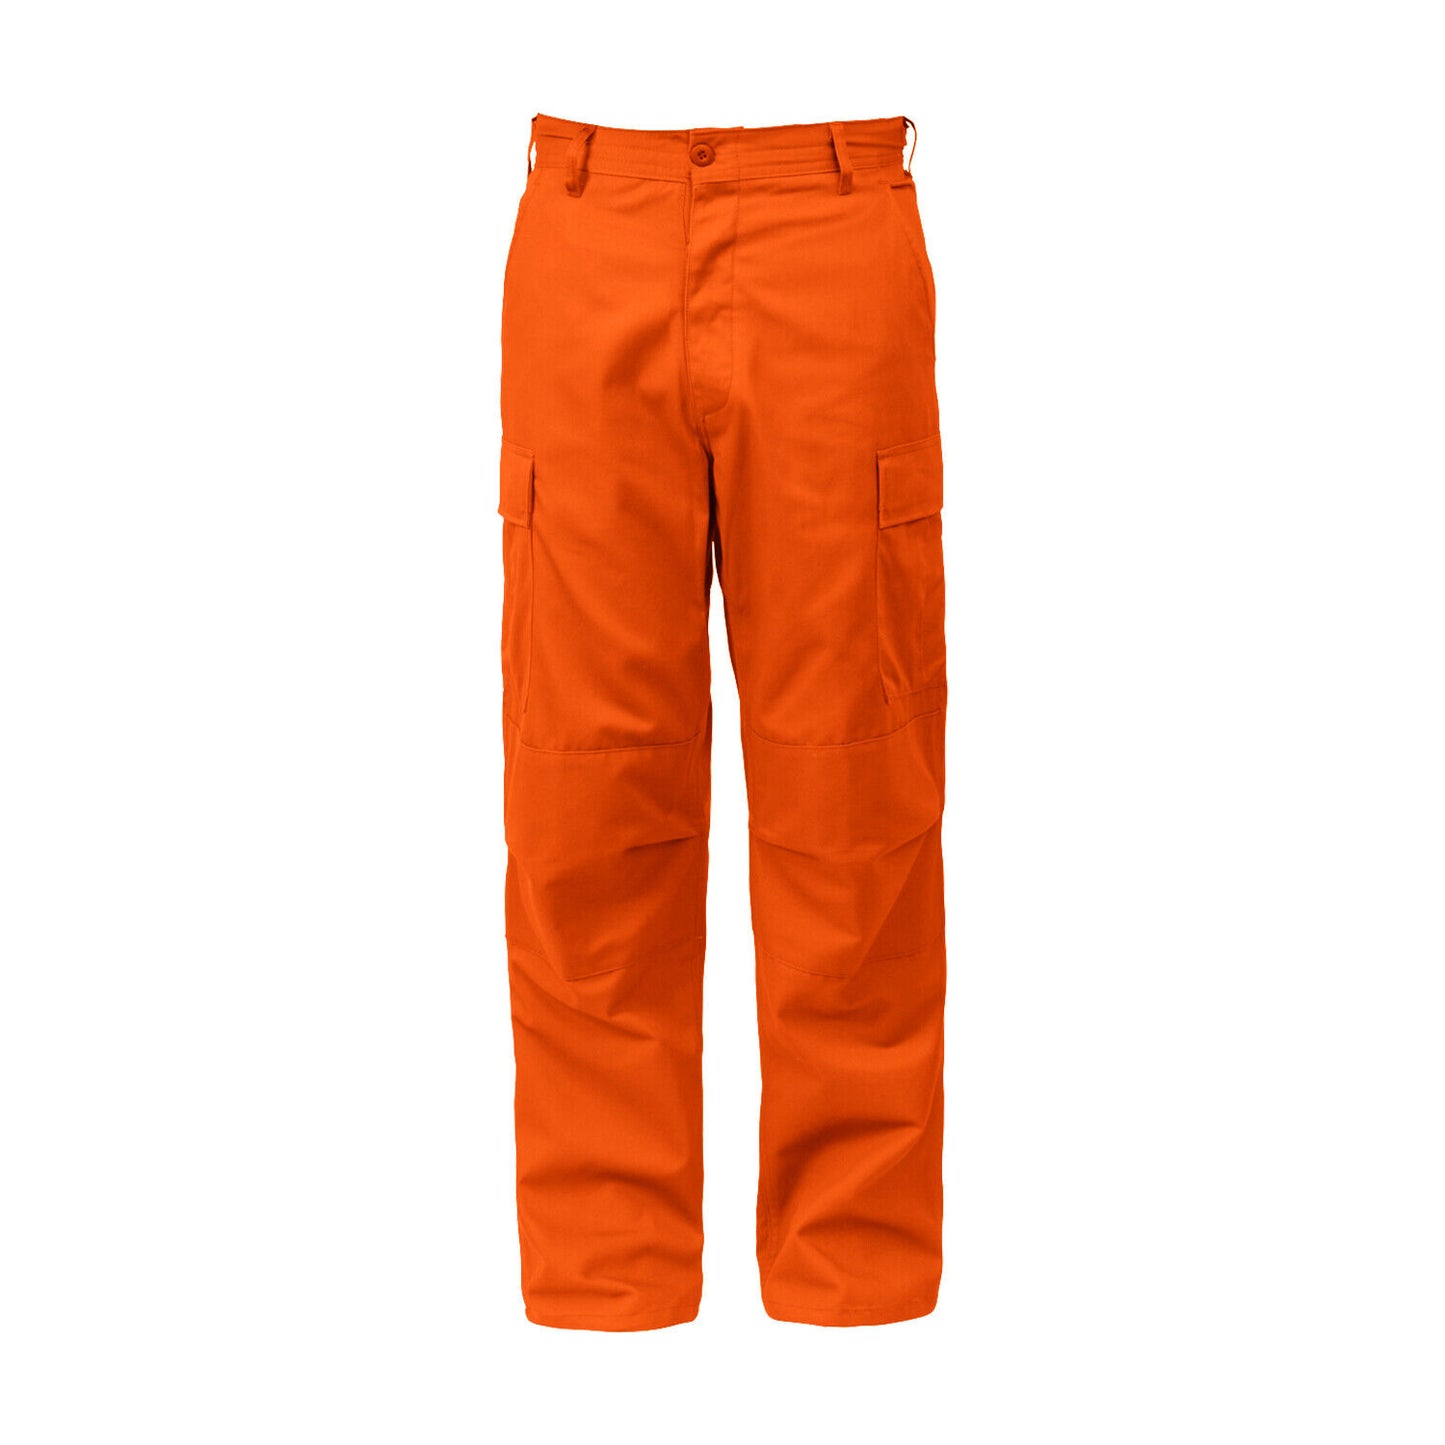 Tactical Camouflage BDU Pants - Orange